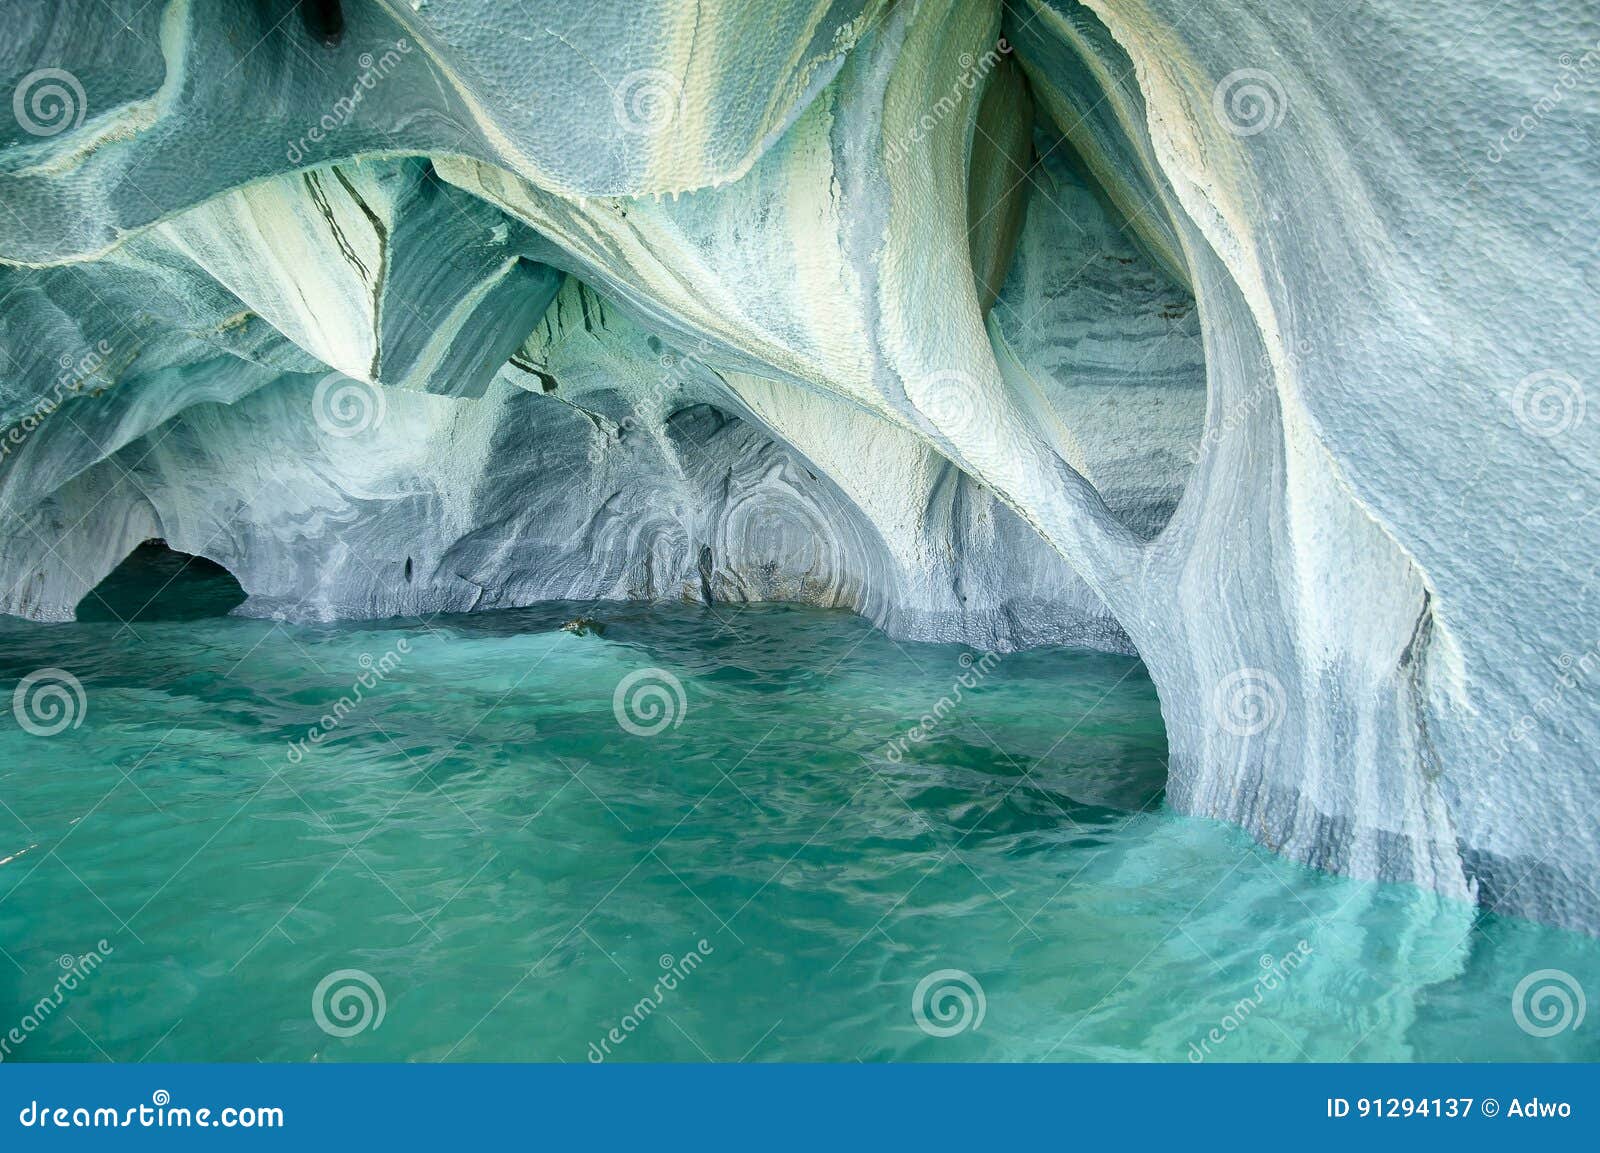 marble caves - carrera lake - chile